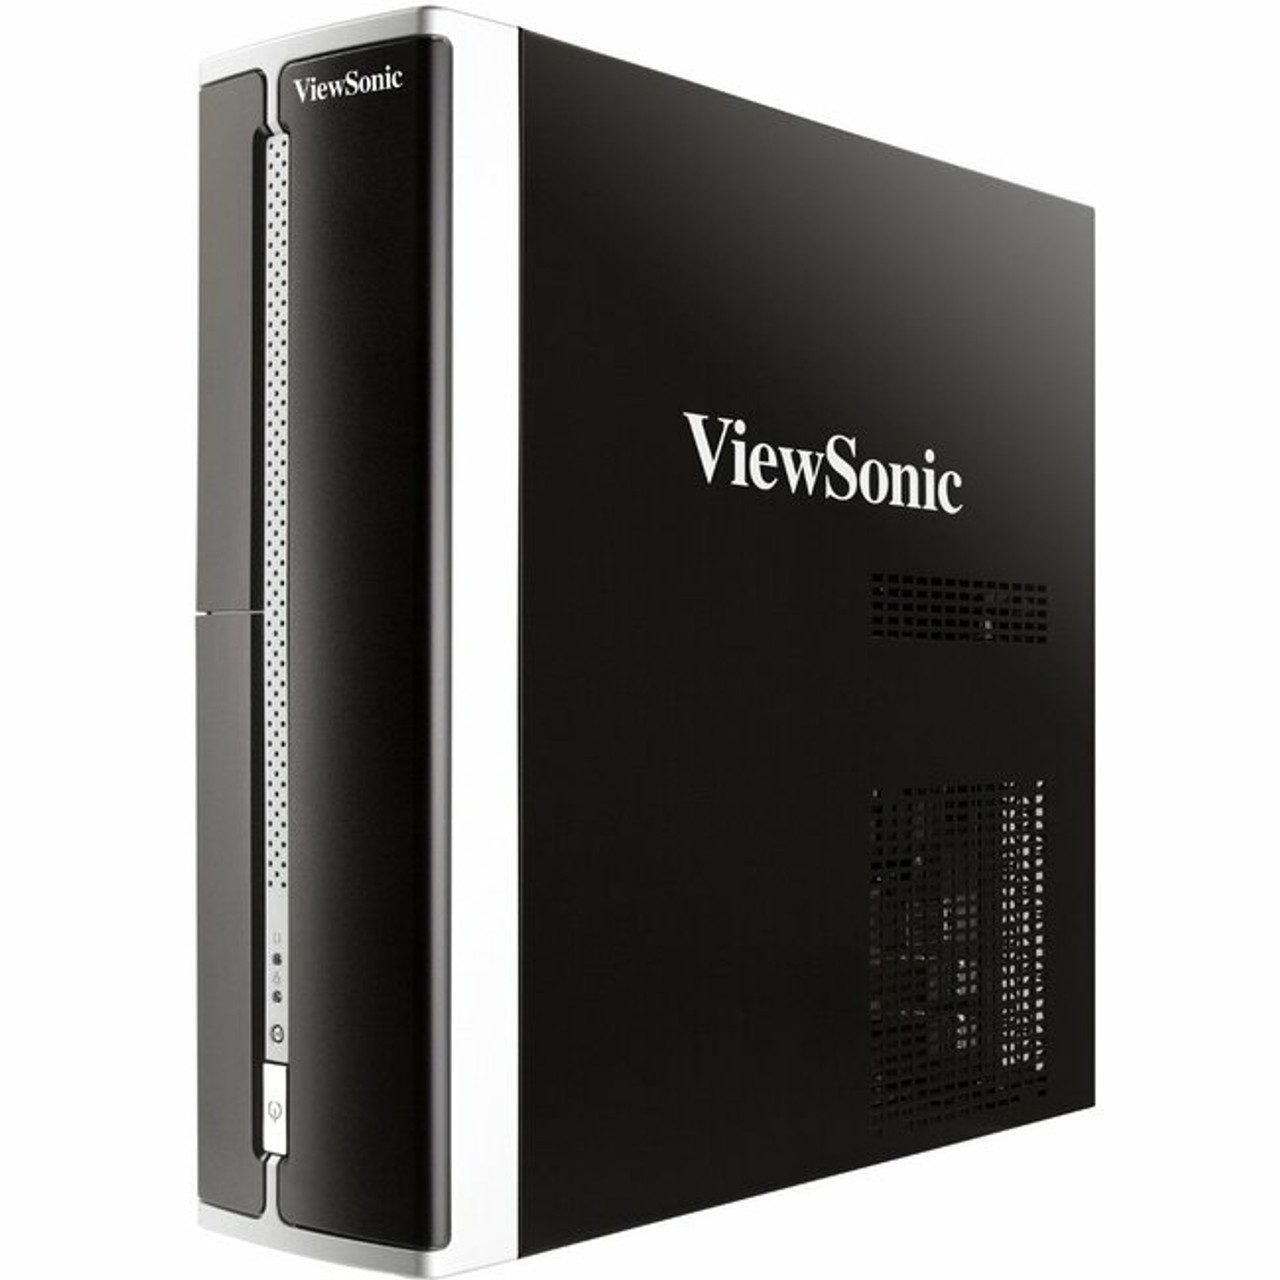 Viewsonic VMS700B_S1US_02